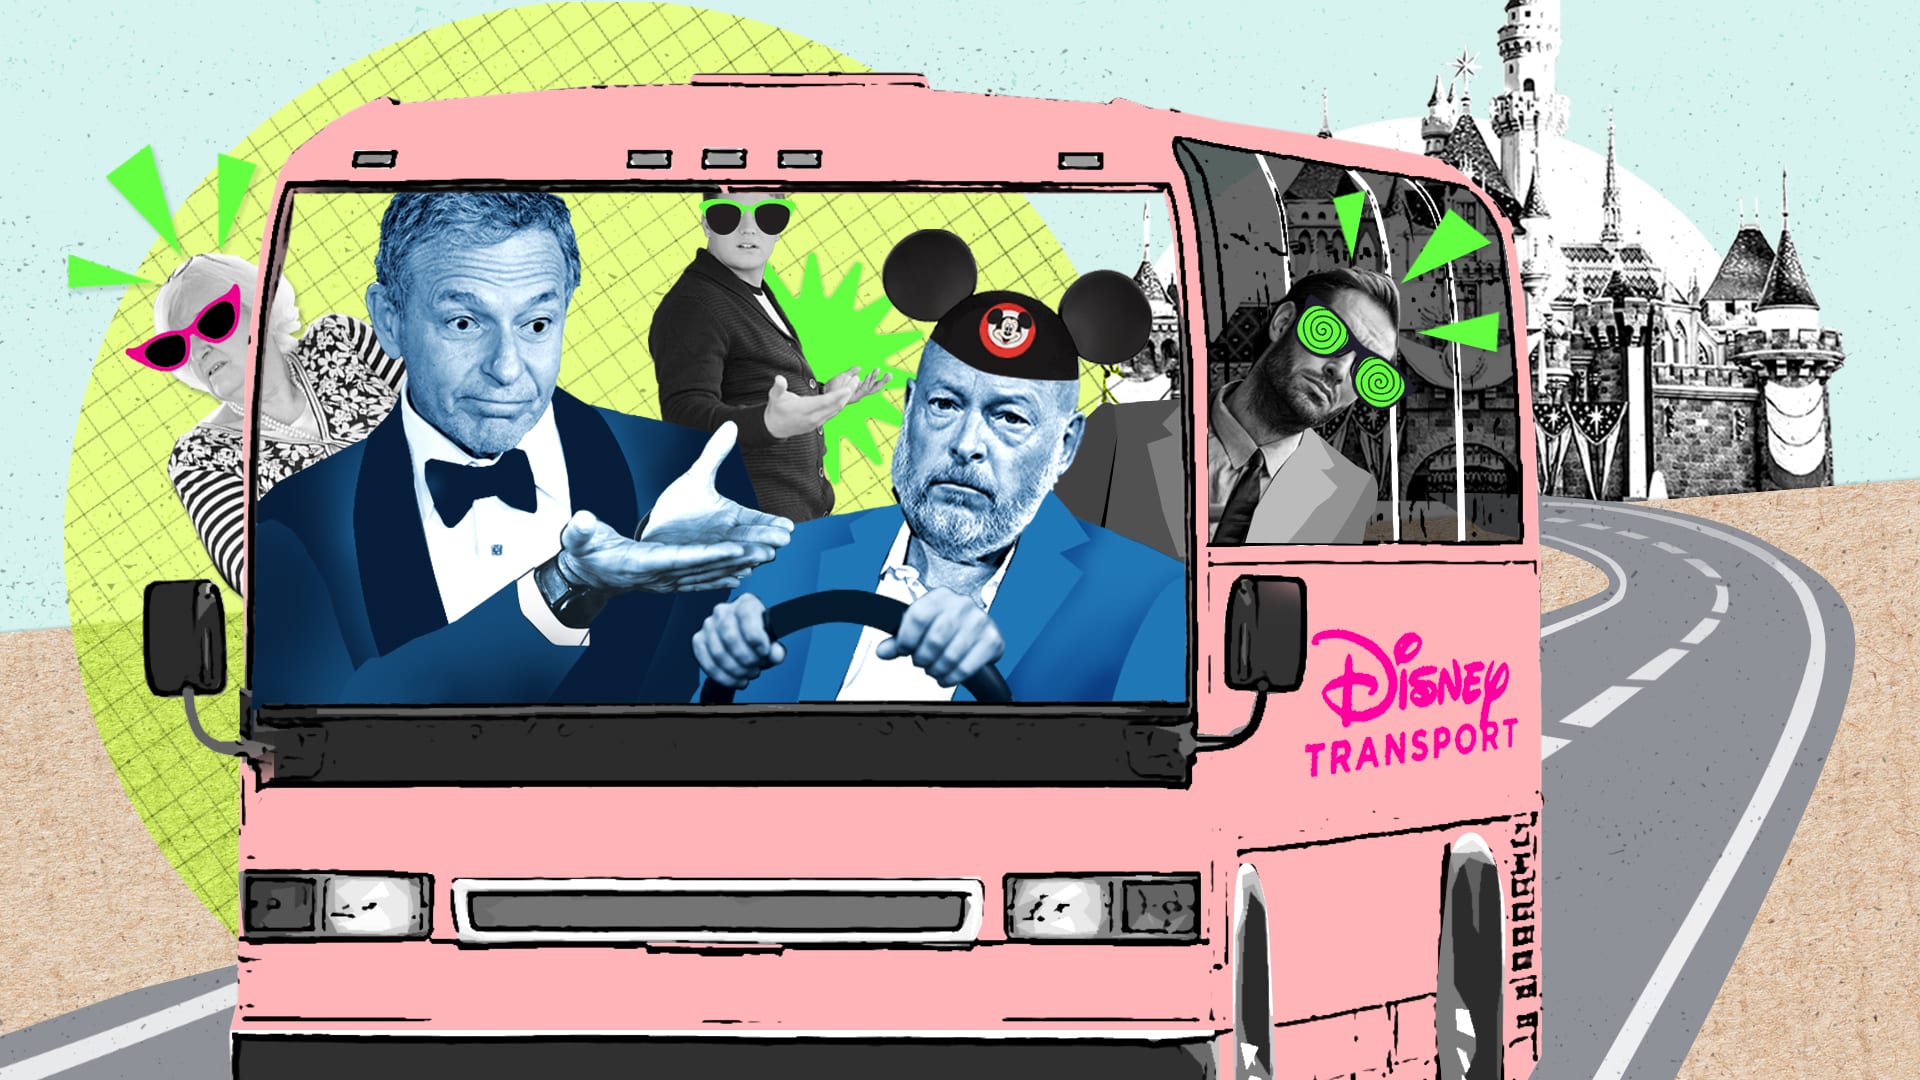 Disney Channel U.S. Premieres Epic Season Five of Global Hit